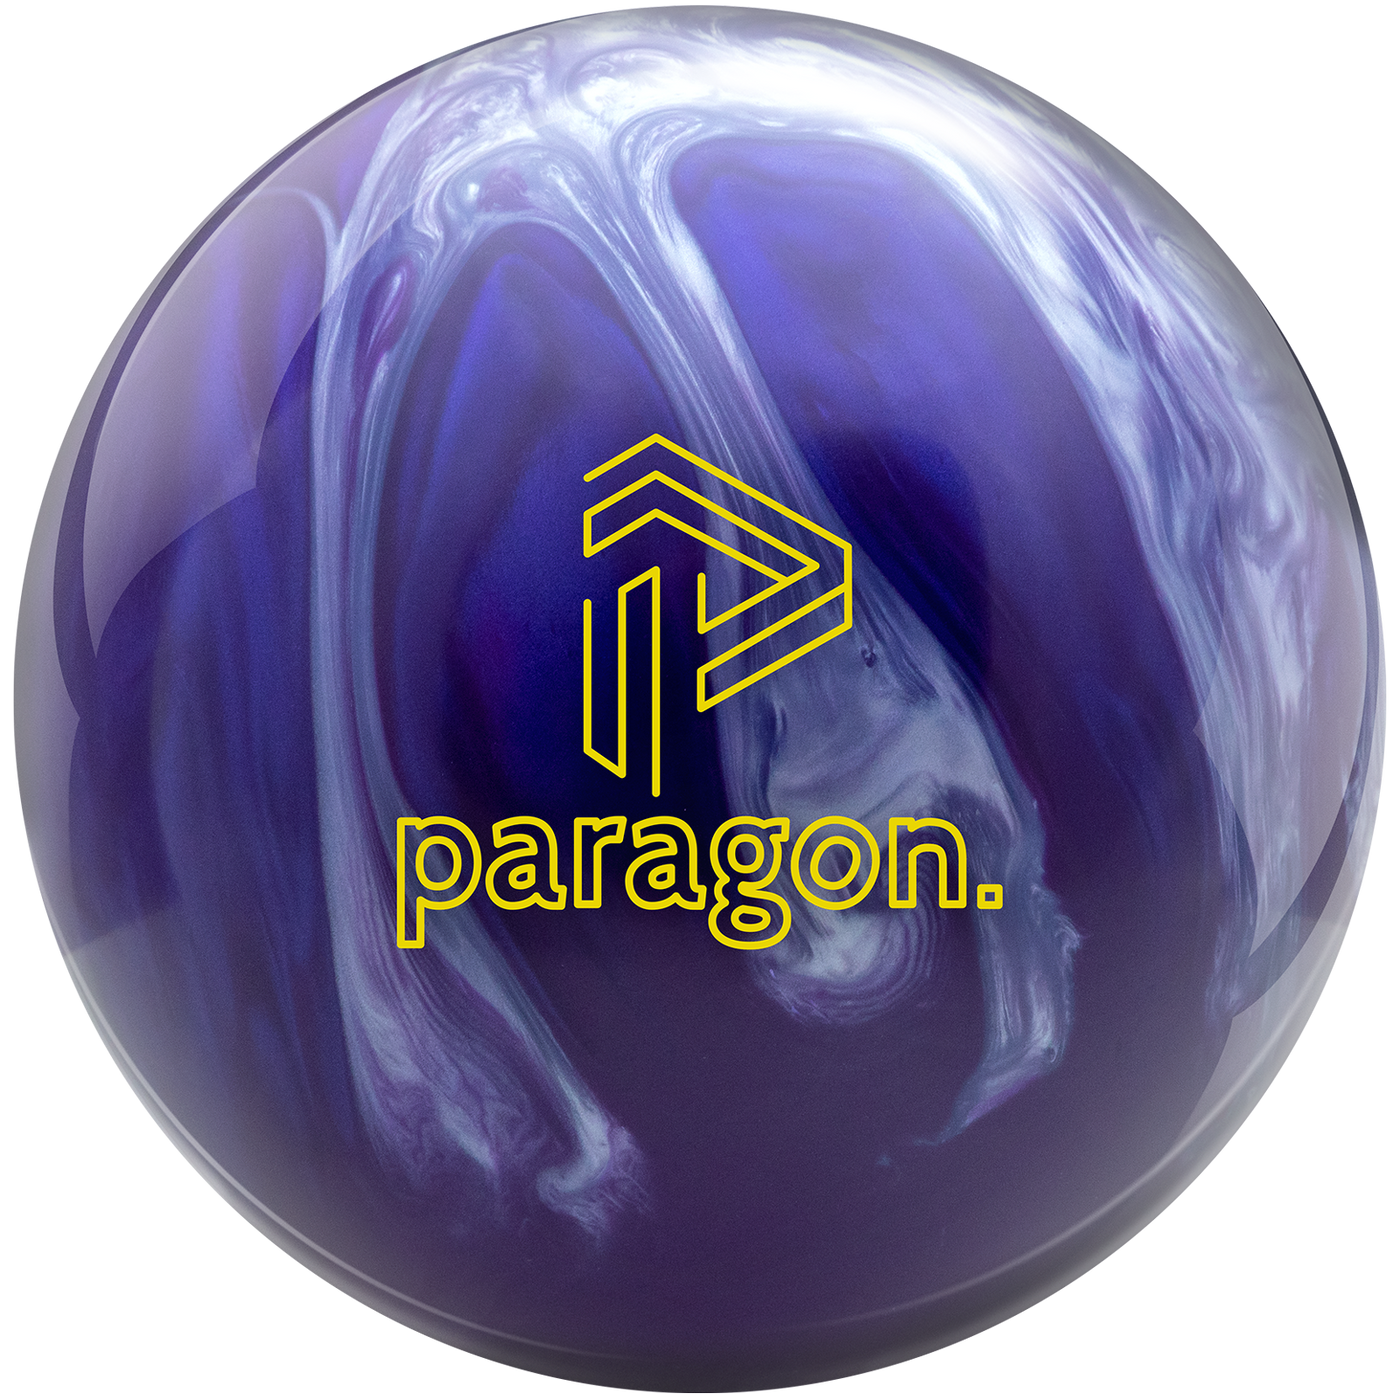 Paragon Hybrid Bowling Ball